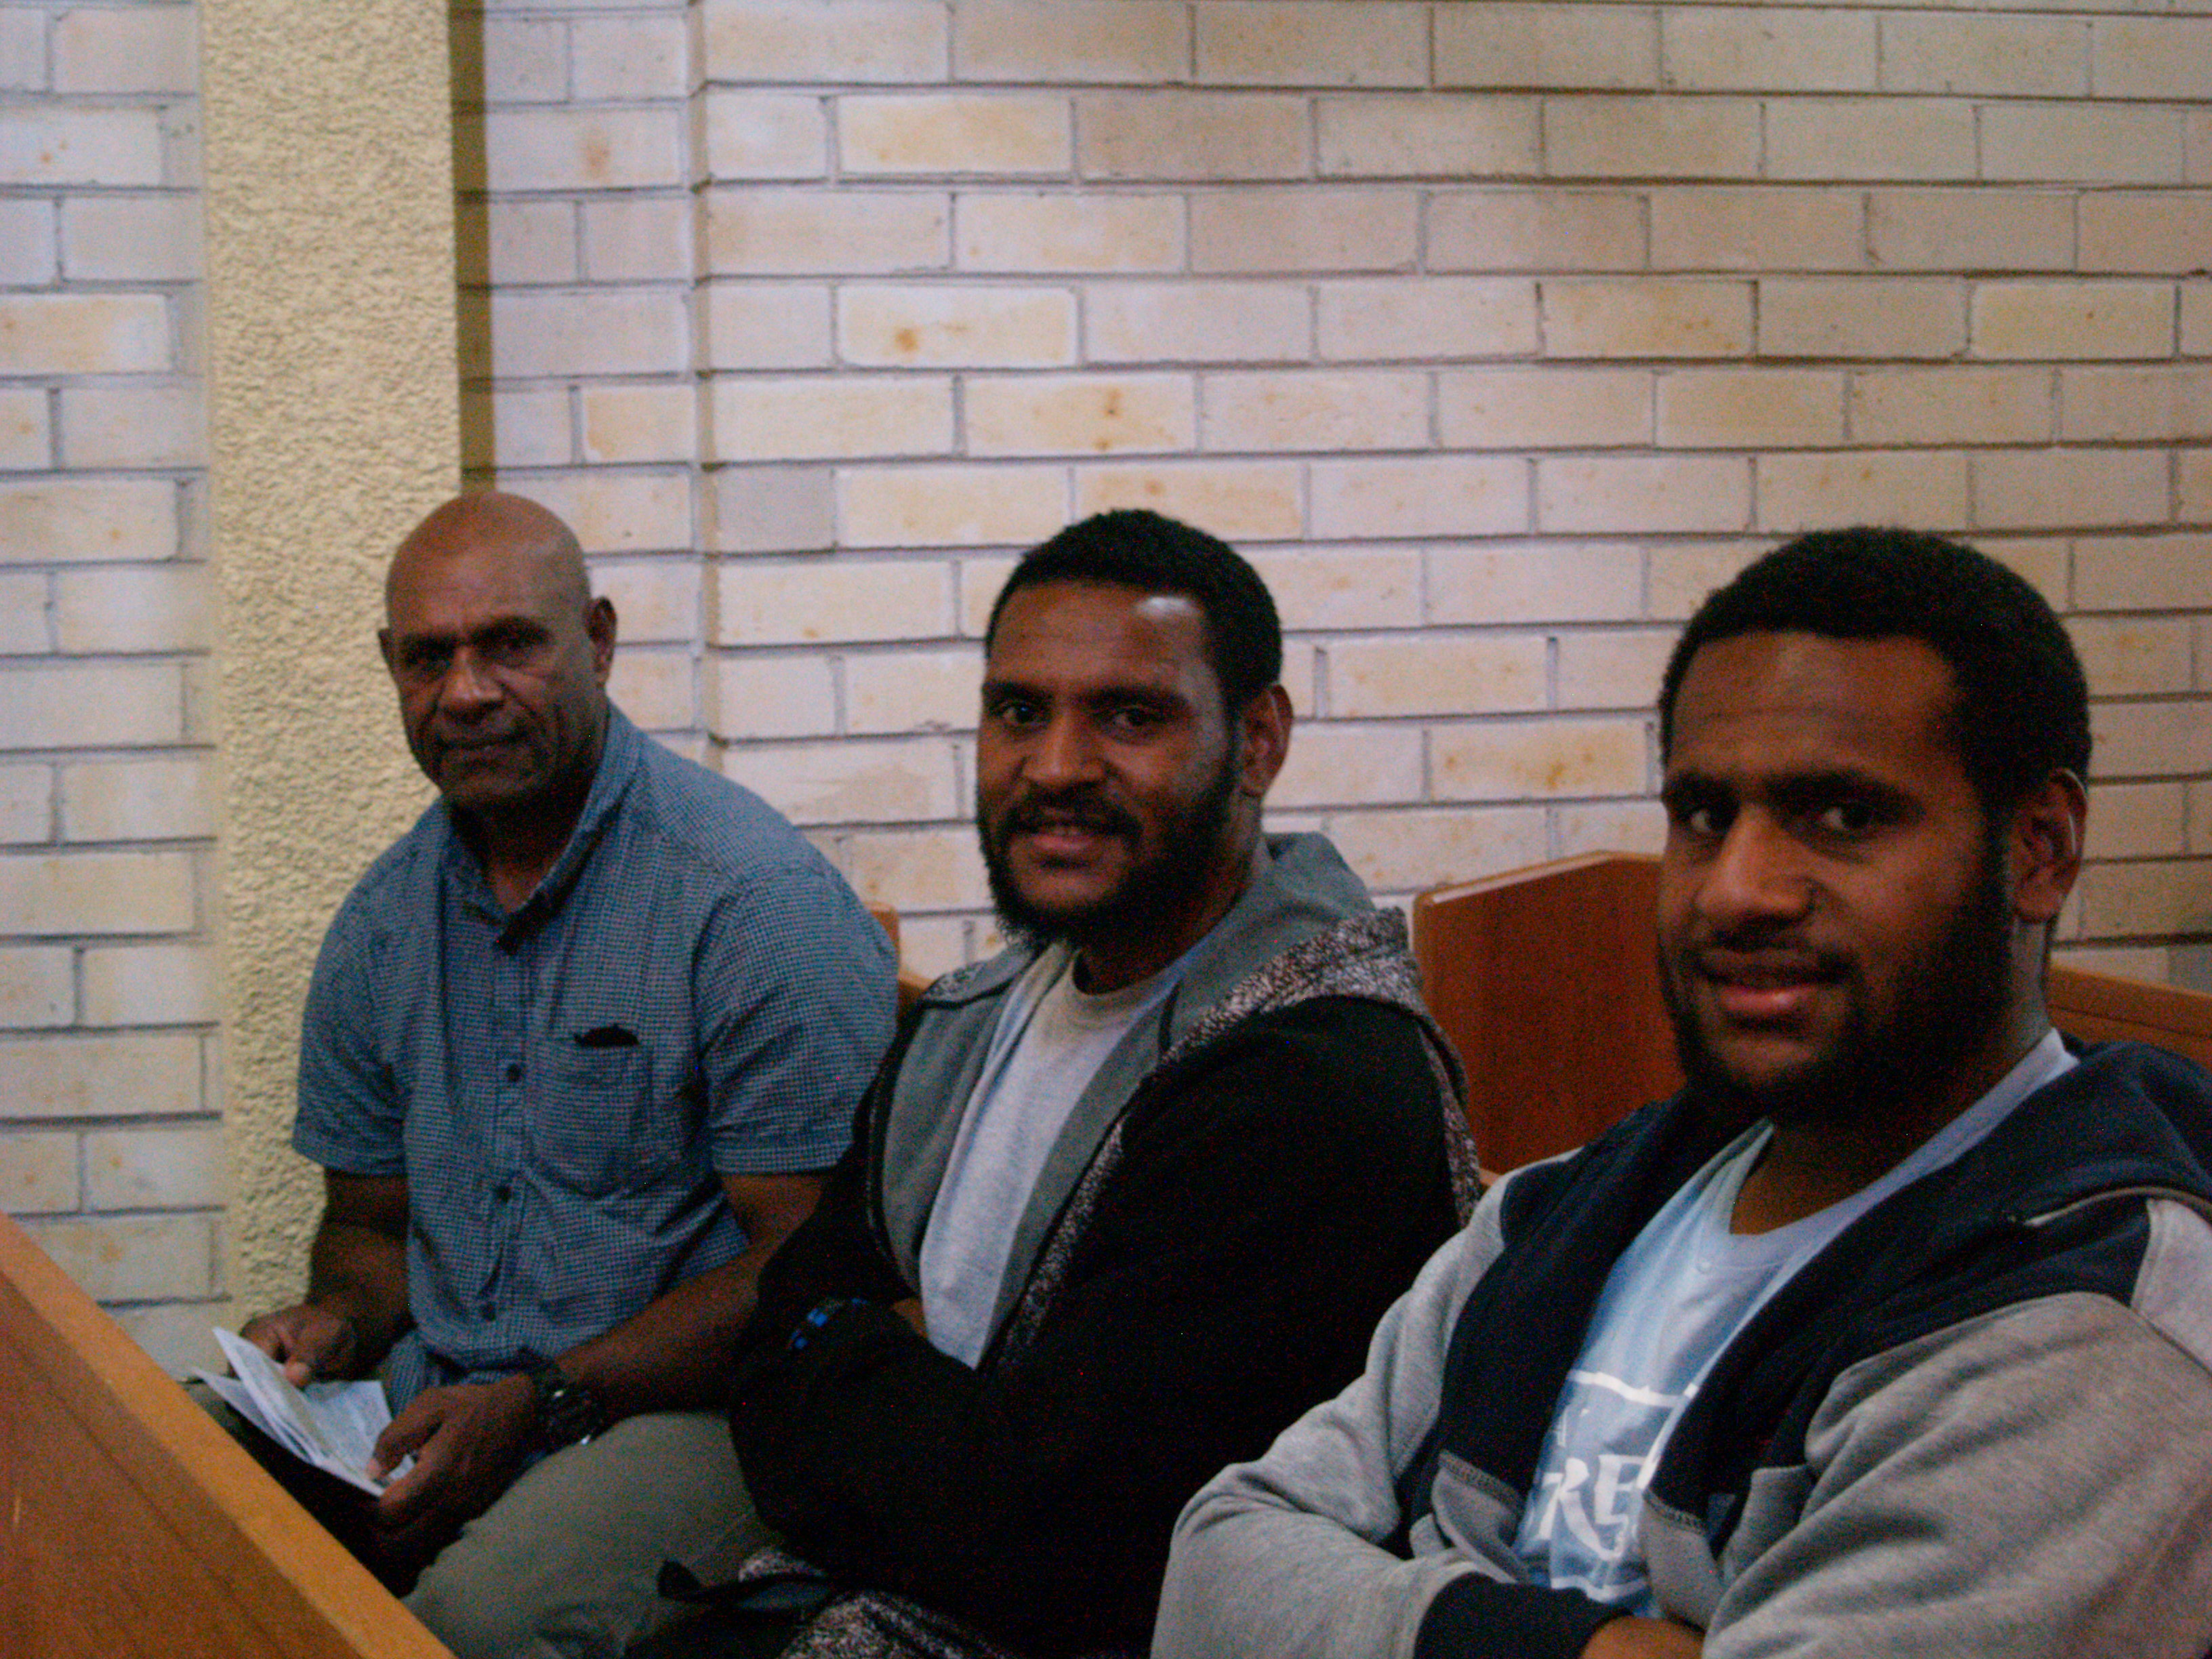 Friends from Papua New Guinea